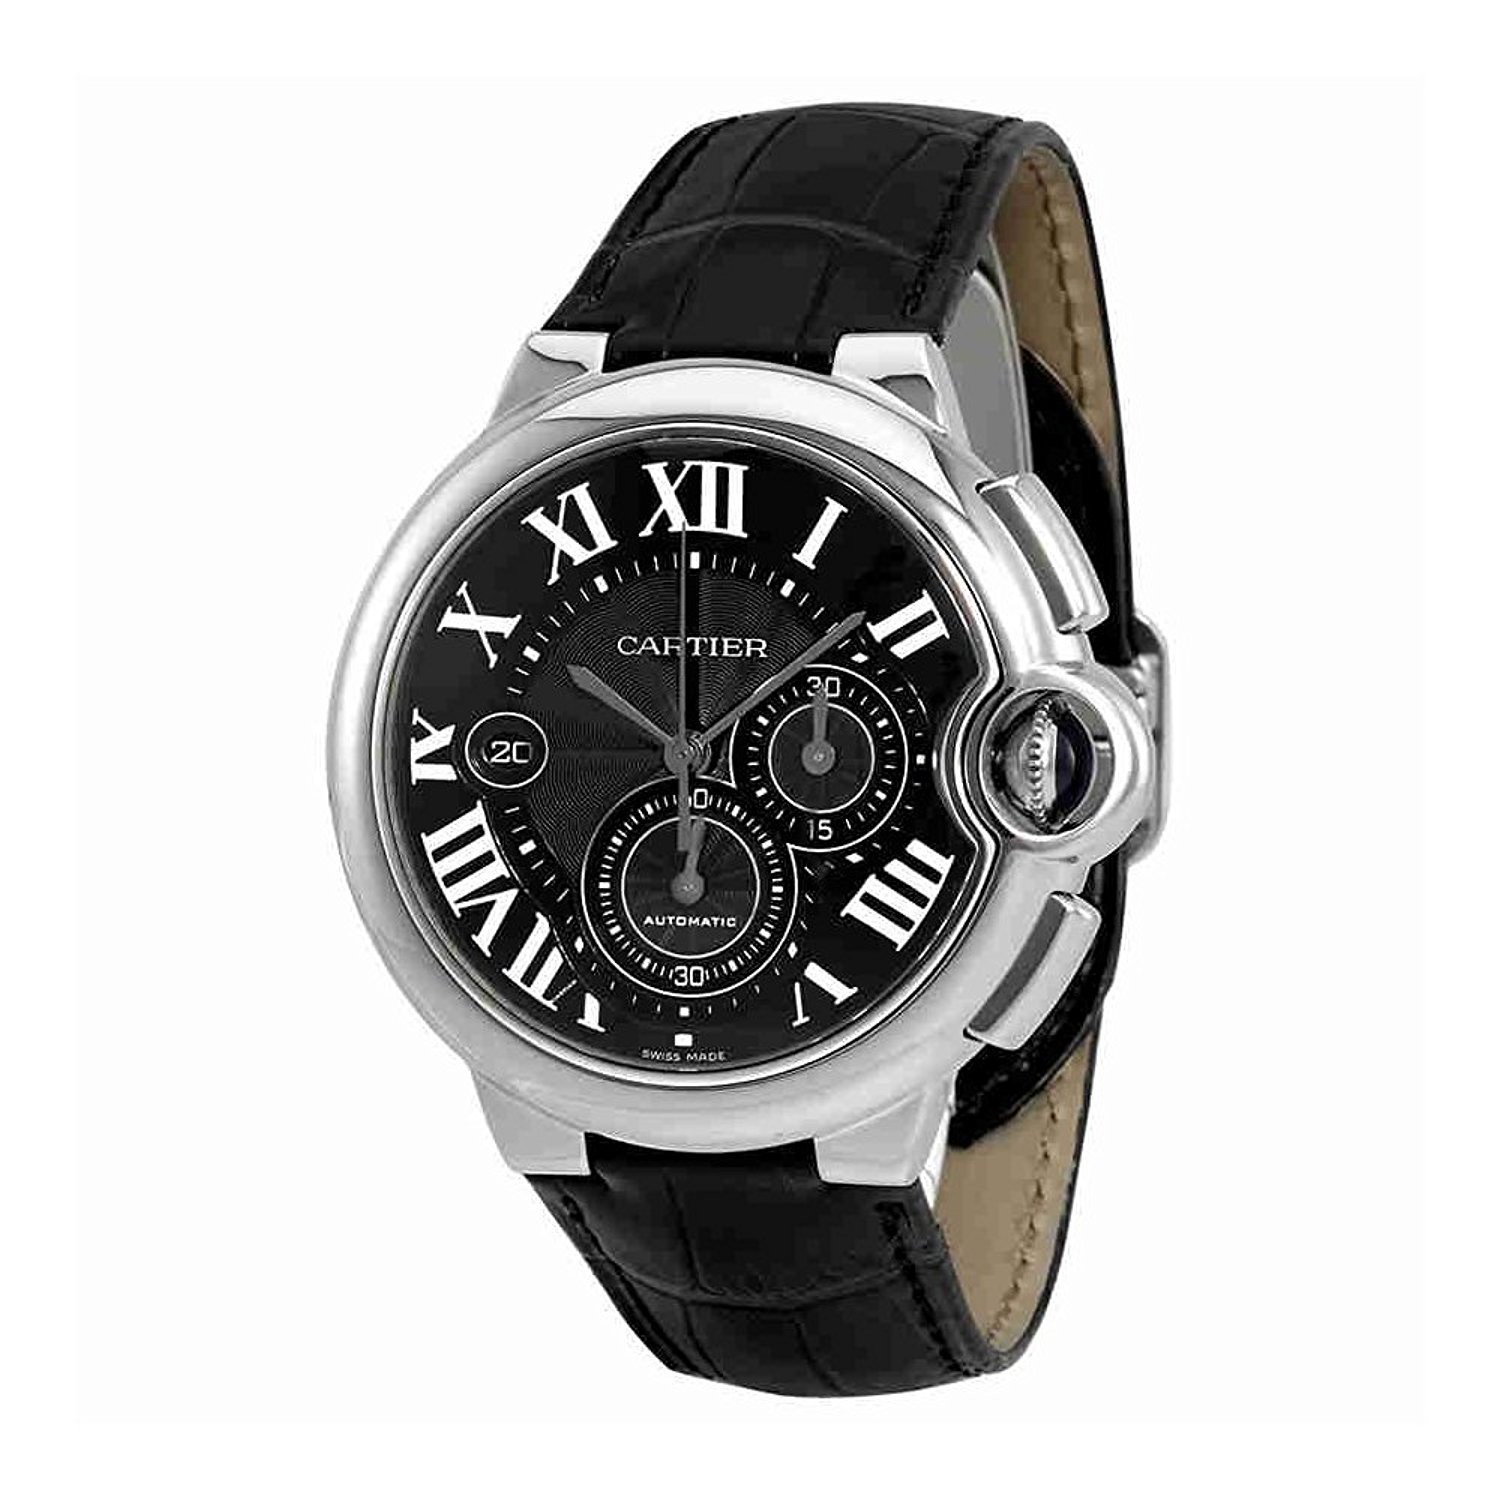 Cartier Automatic Dial Color Gray Flinque Watch #W6920079 (Men Watch)